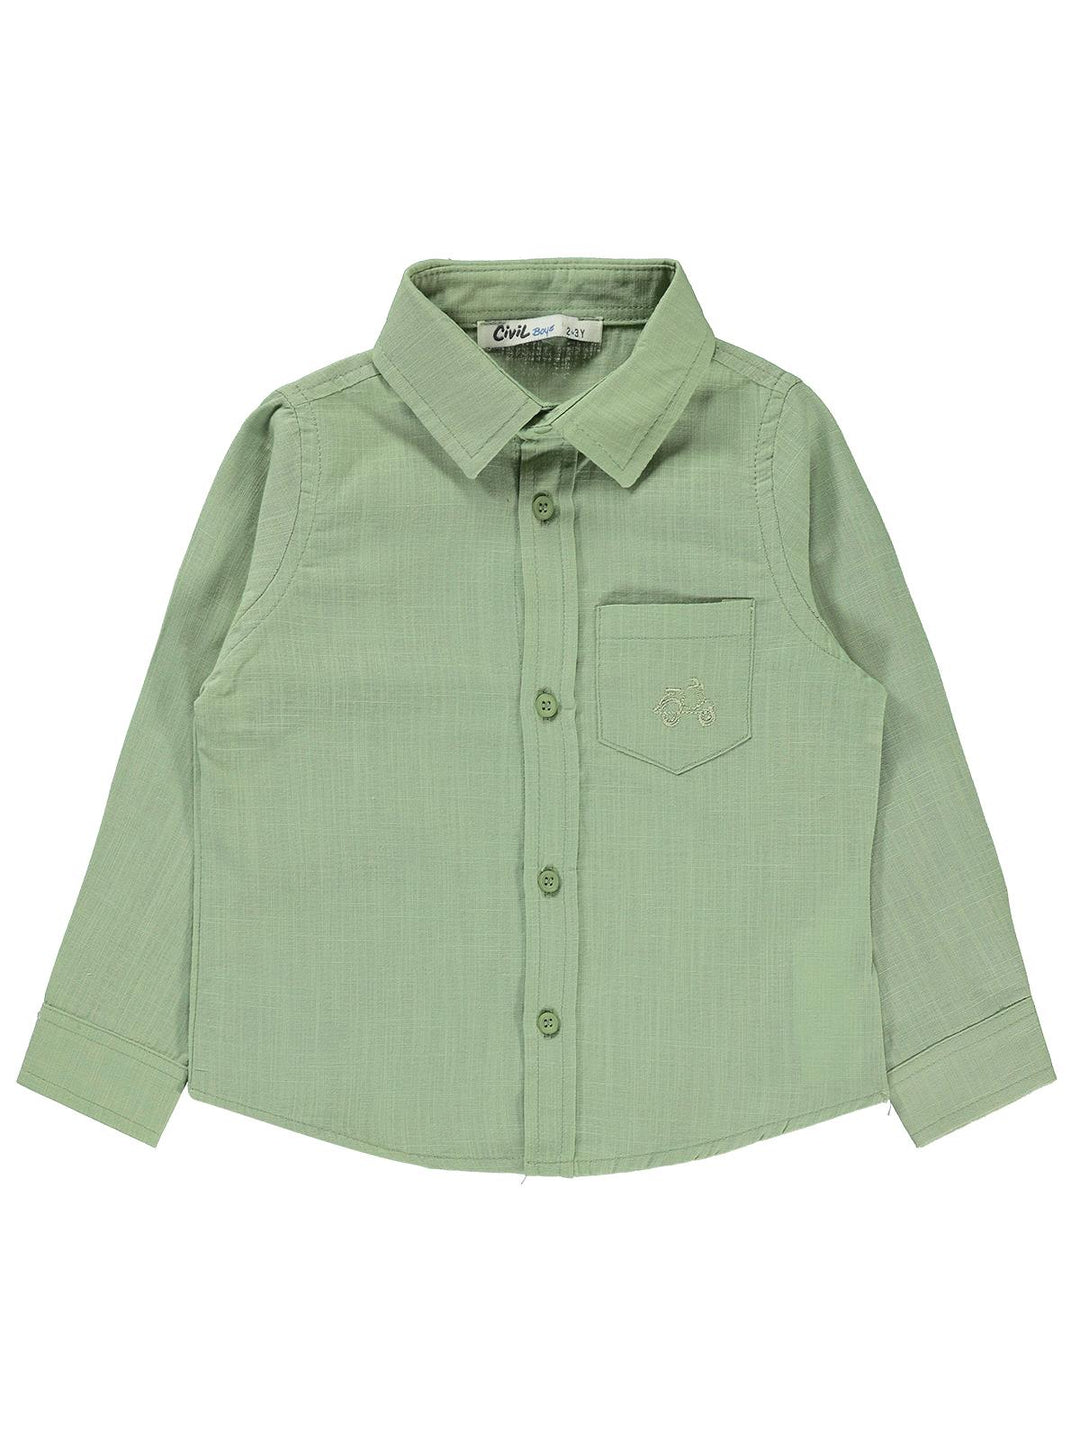 Civil Boys F/S Linen Collar Shirt F/O #2203-3 (S-22)